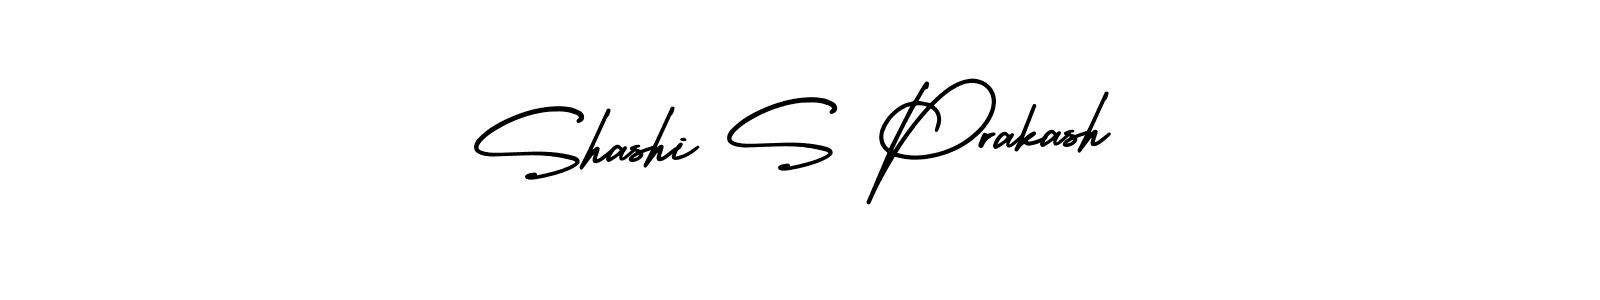 How to Draw Shashi S Prakash signature style? AmerikaSignatureDemo-Regular is a latest design signature styles for name Shashi S Prakash. Shashi S Prakash signature style 3 images and pictures png